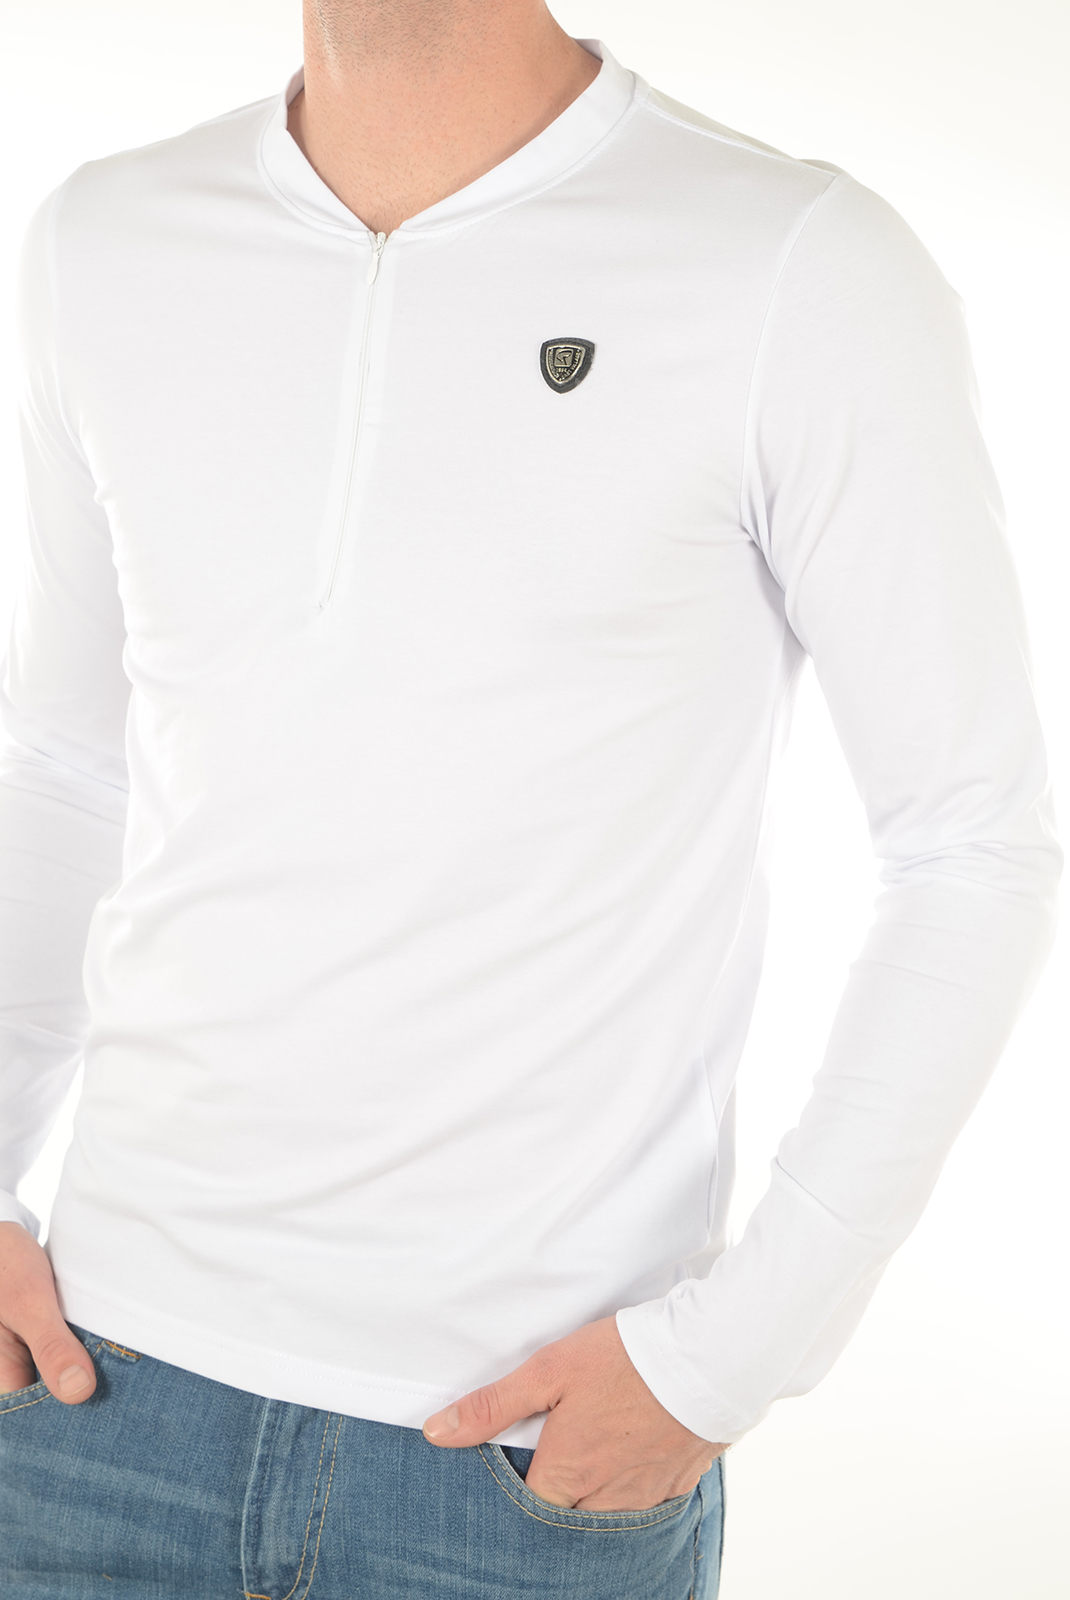 T-Shirt blanc homme - Redskins Wow Warner